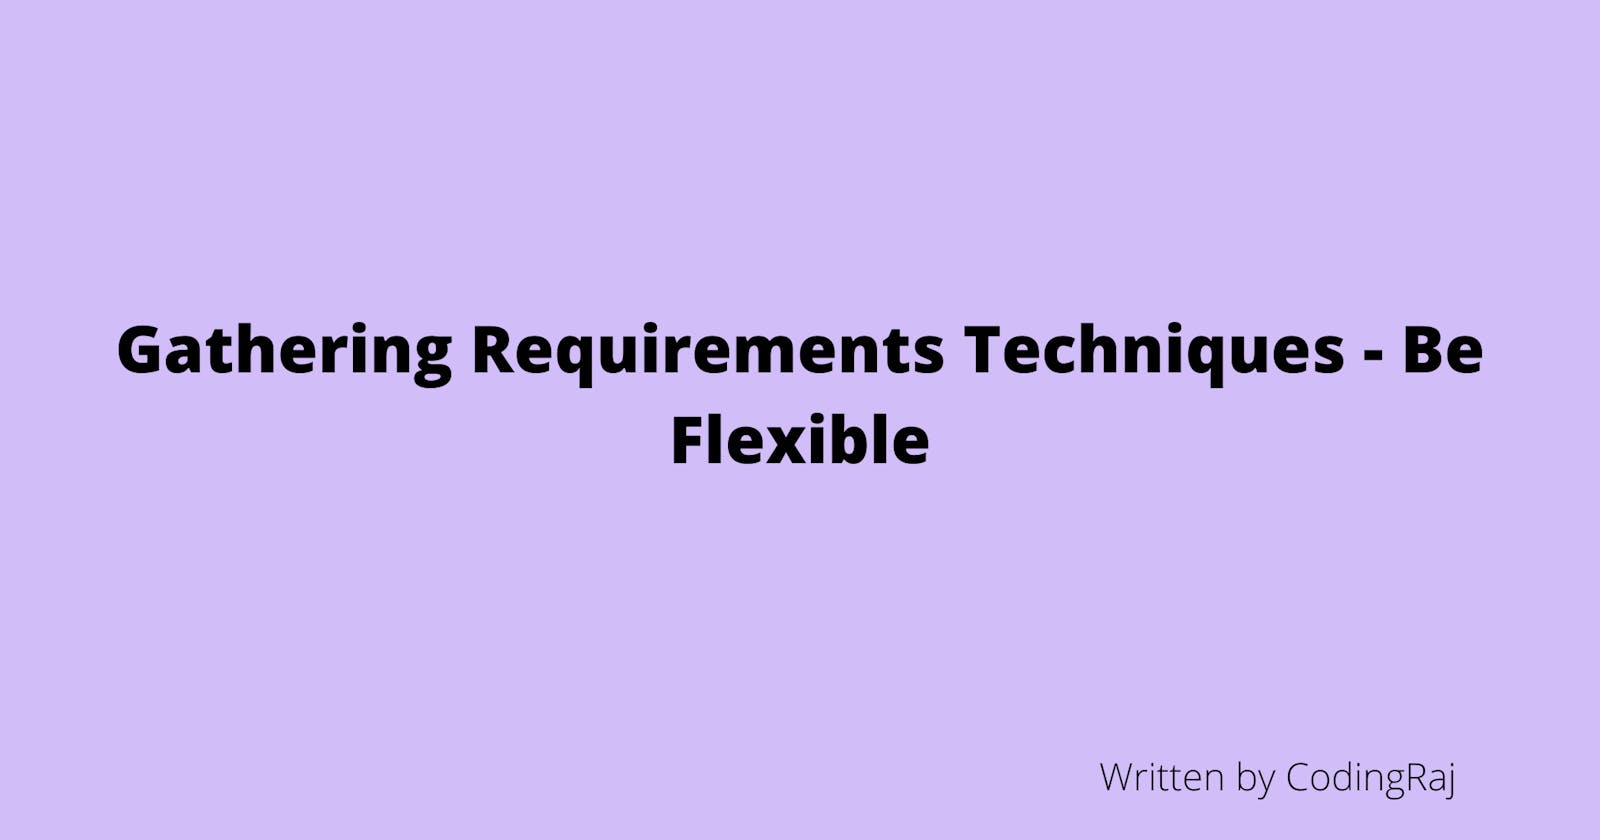 Gathering Requirements Techniques - Be Flexible